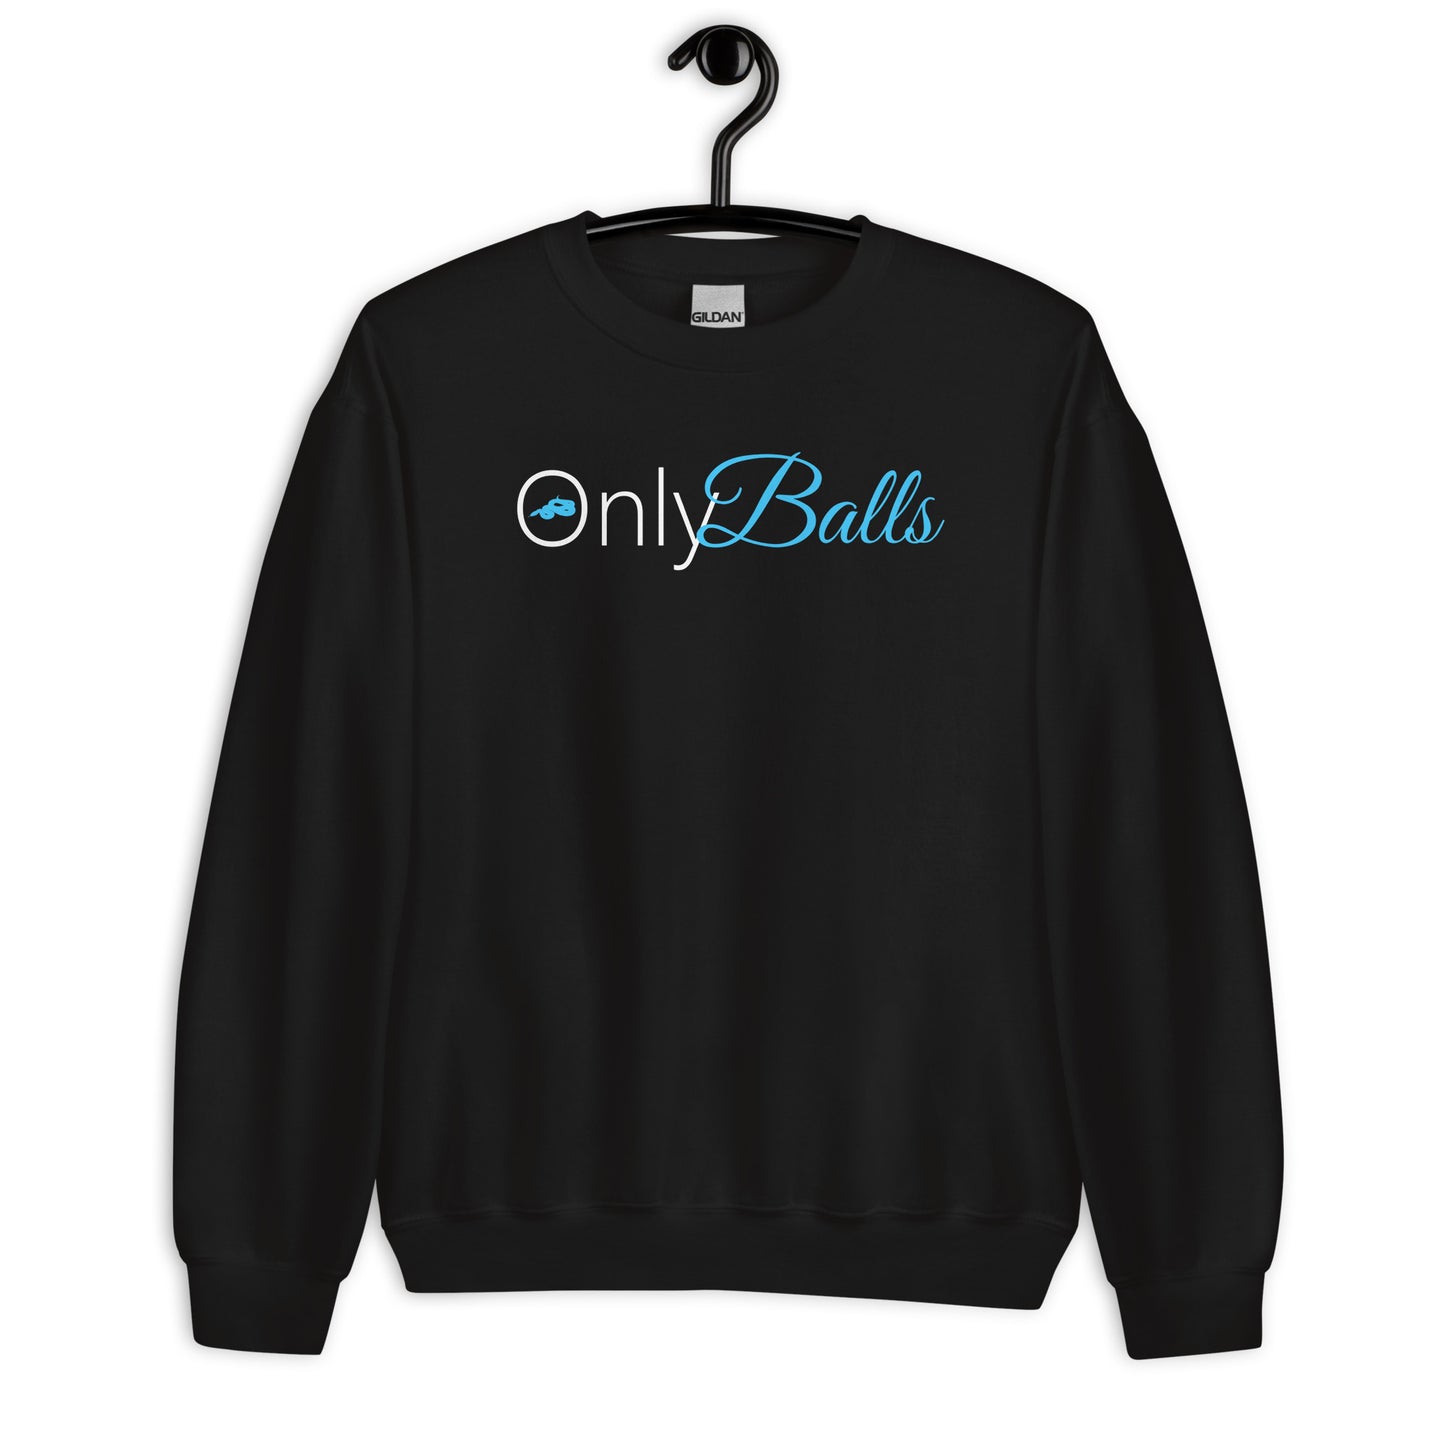 OnlyBalls Women's Sweatshirt